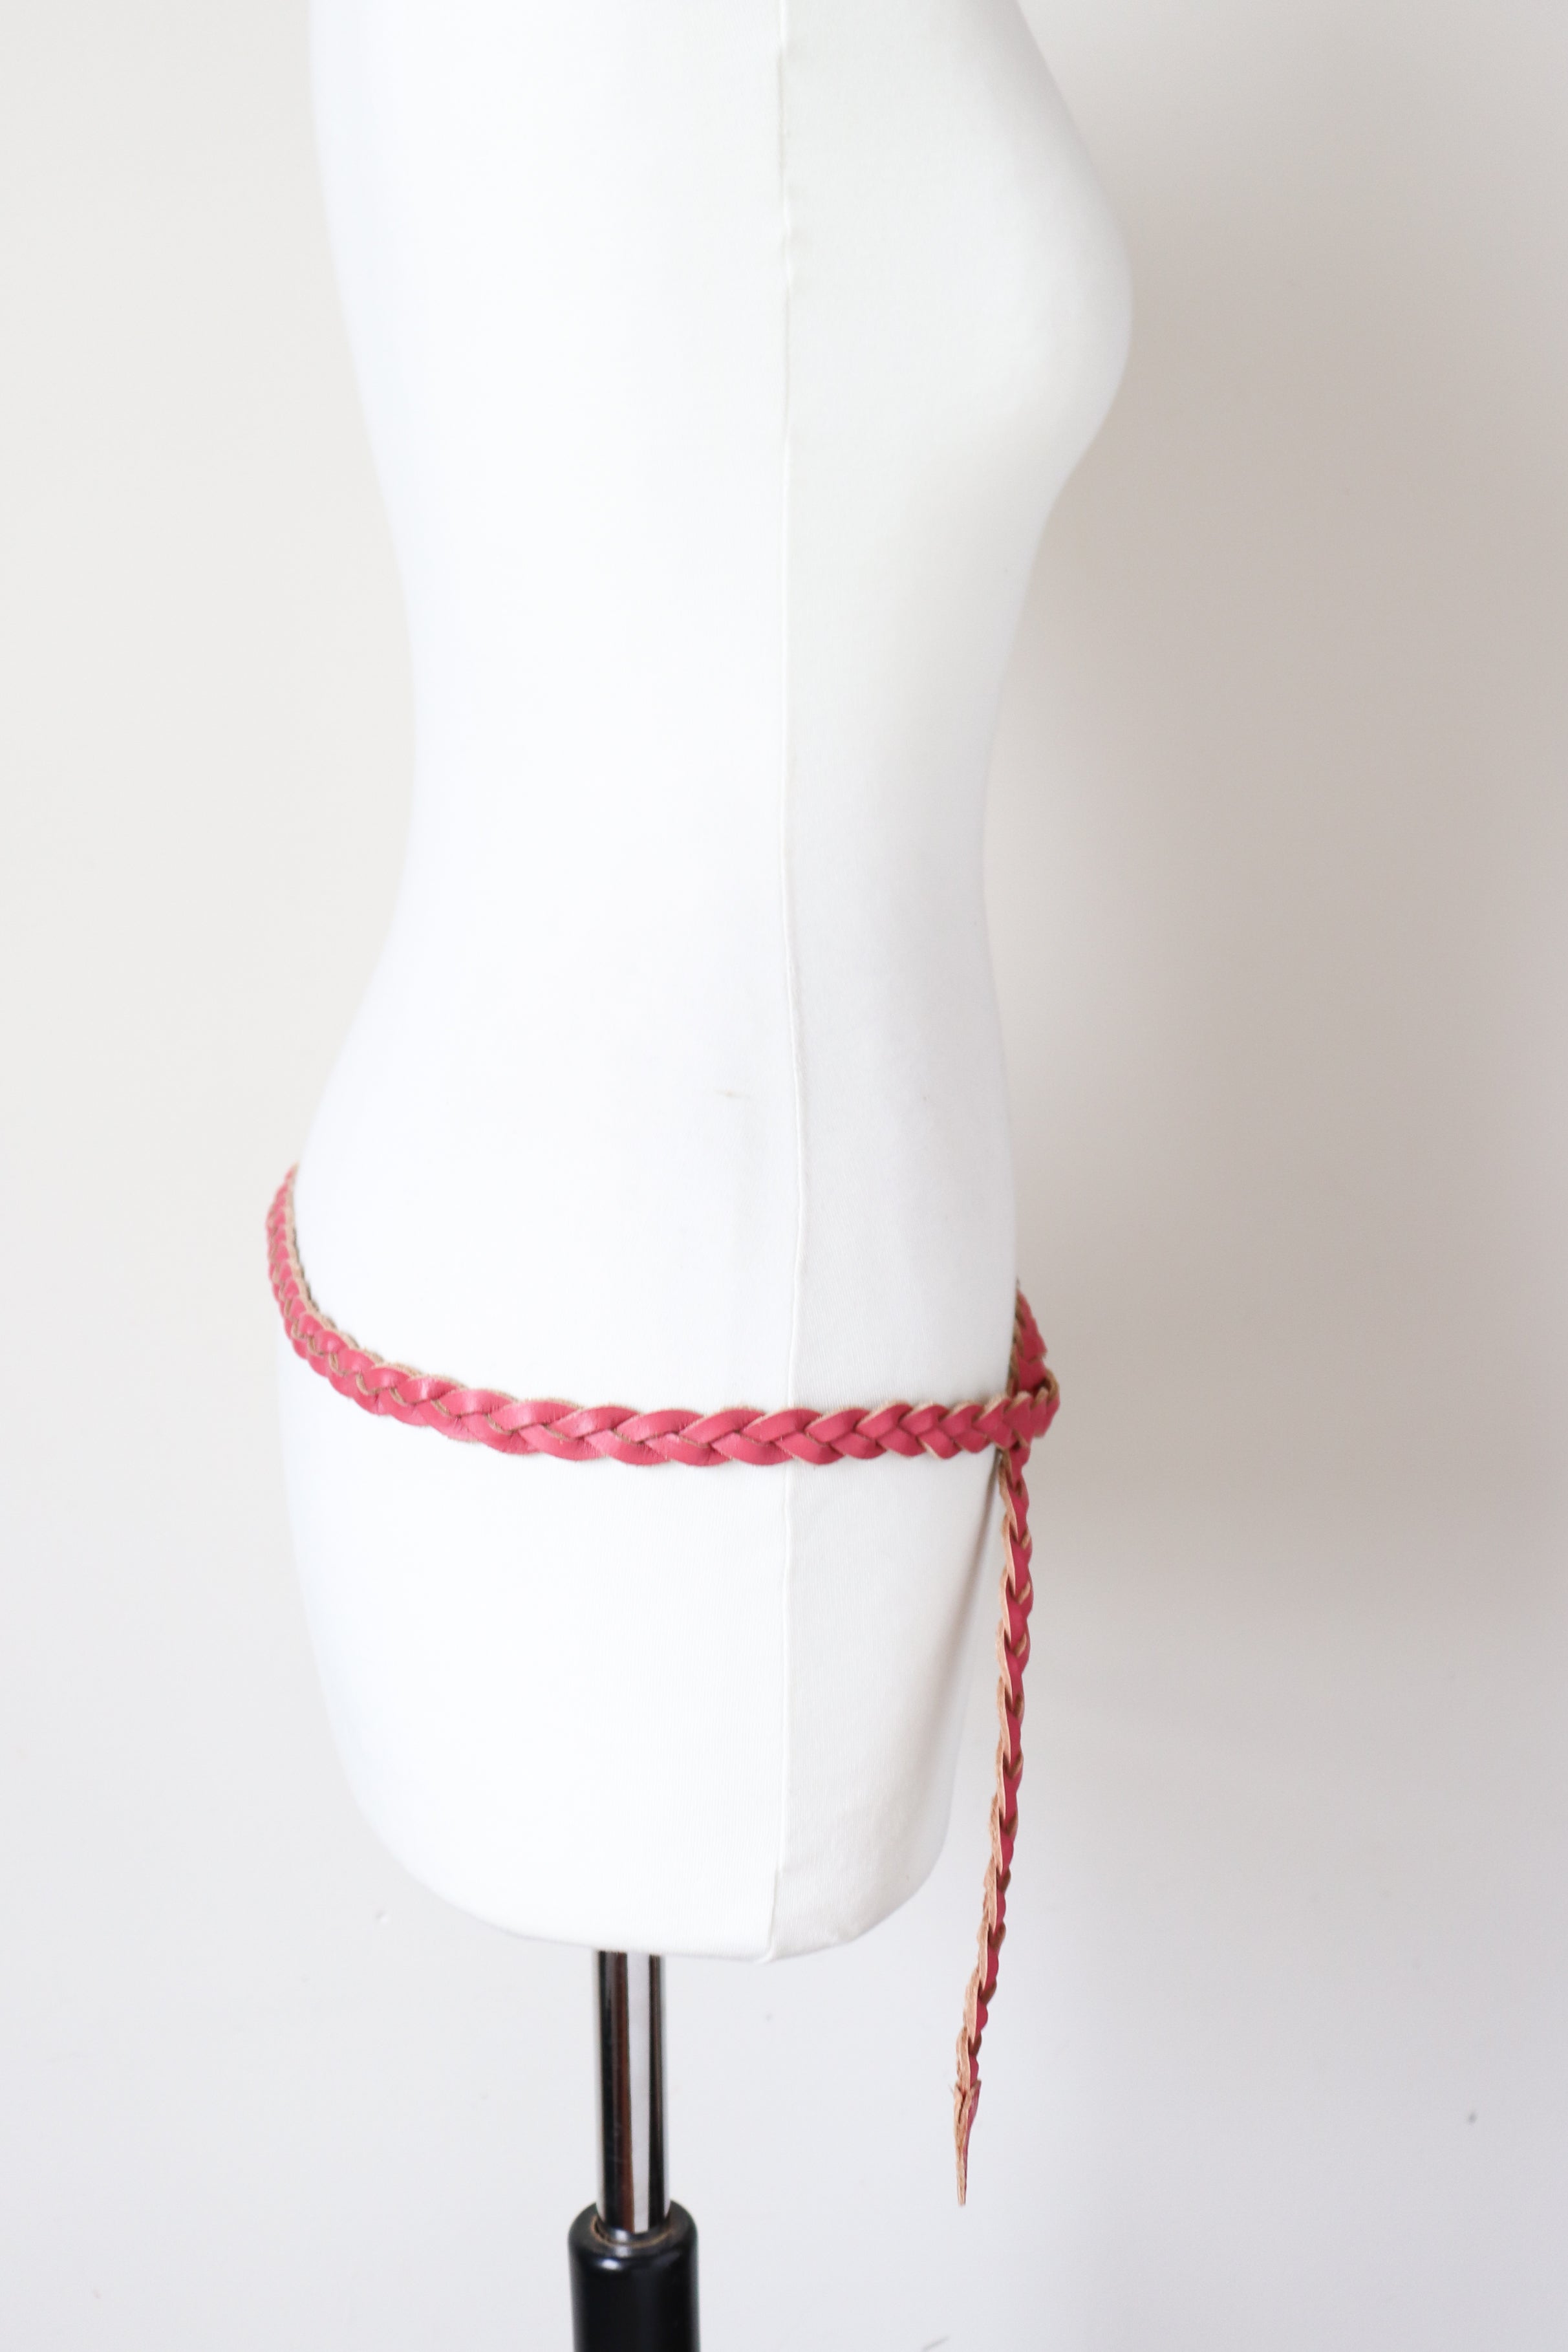 Skinny Plaited Belt - Pink FAUX Leather - 1980s Vintage - X Long - Freesize / Large